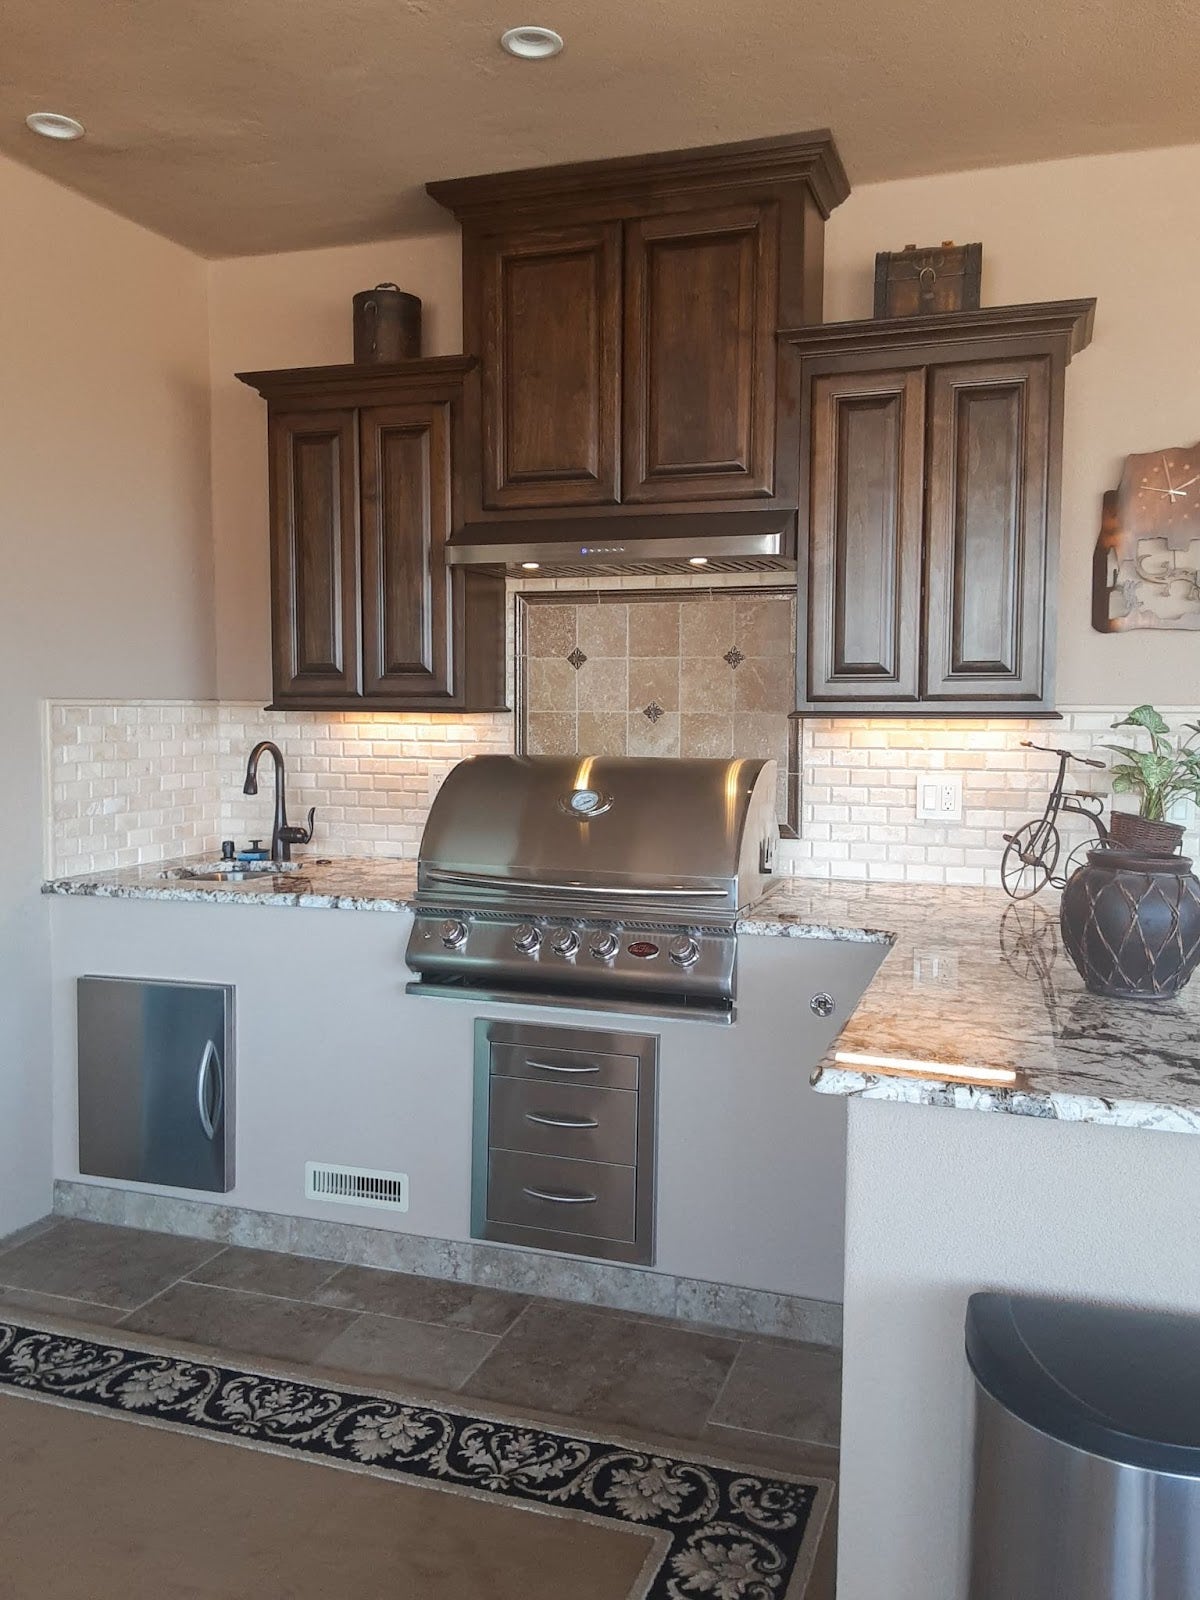 Traditional kitchen design with a Proline range hood complementing dark wood cabinets, beige tile backsplash, and a built-in stainless steel grill - prolinerangehoods.com.